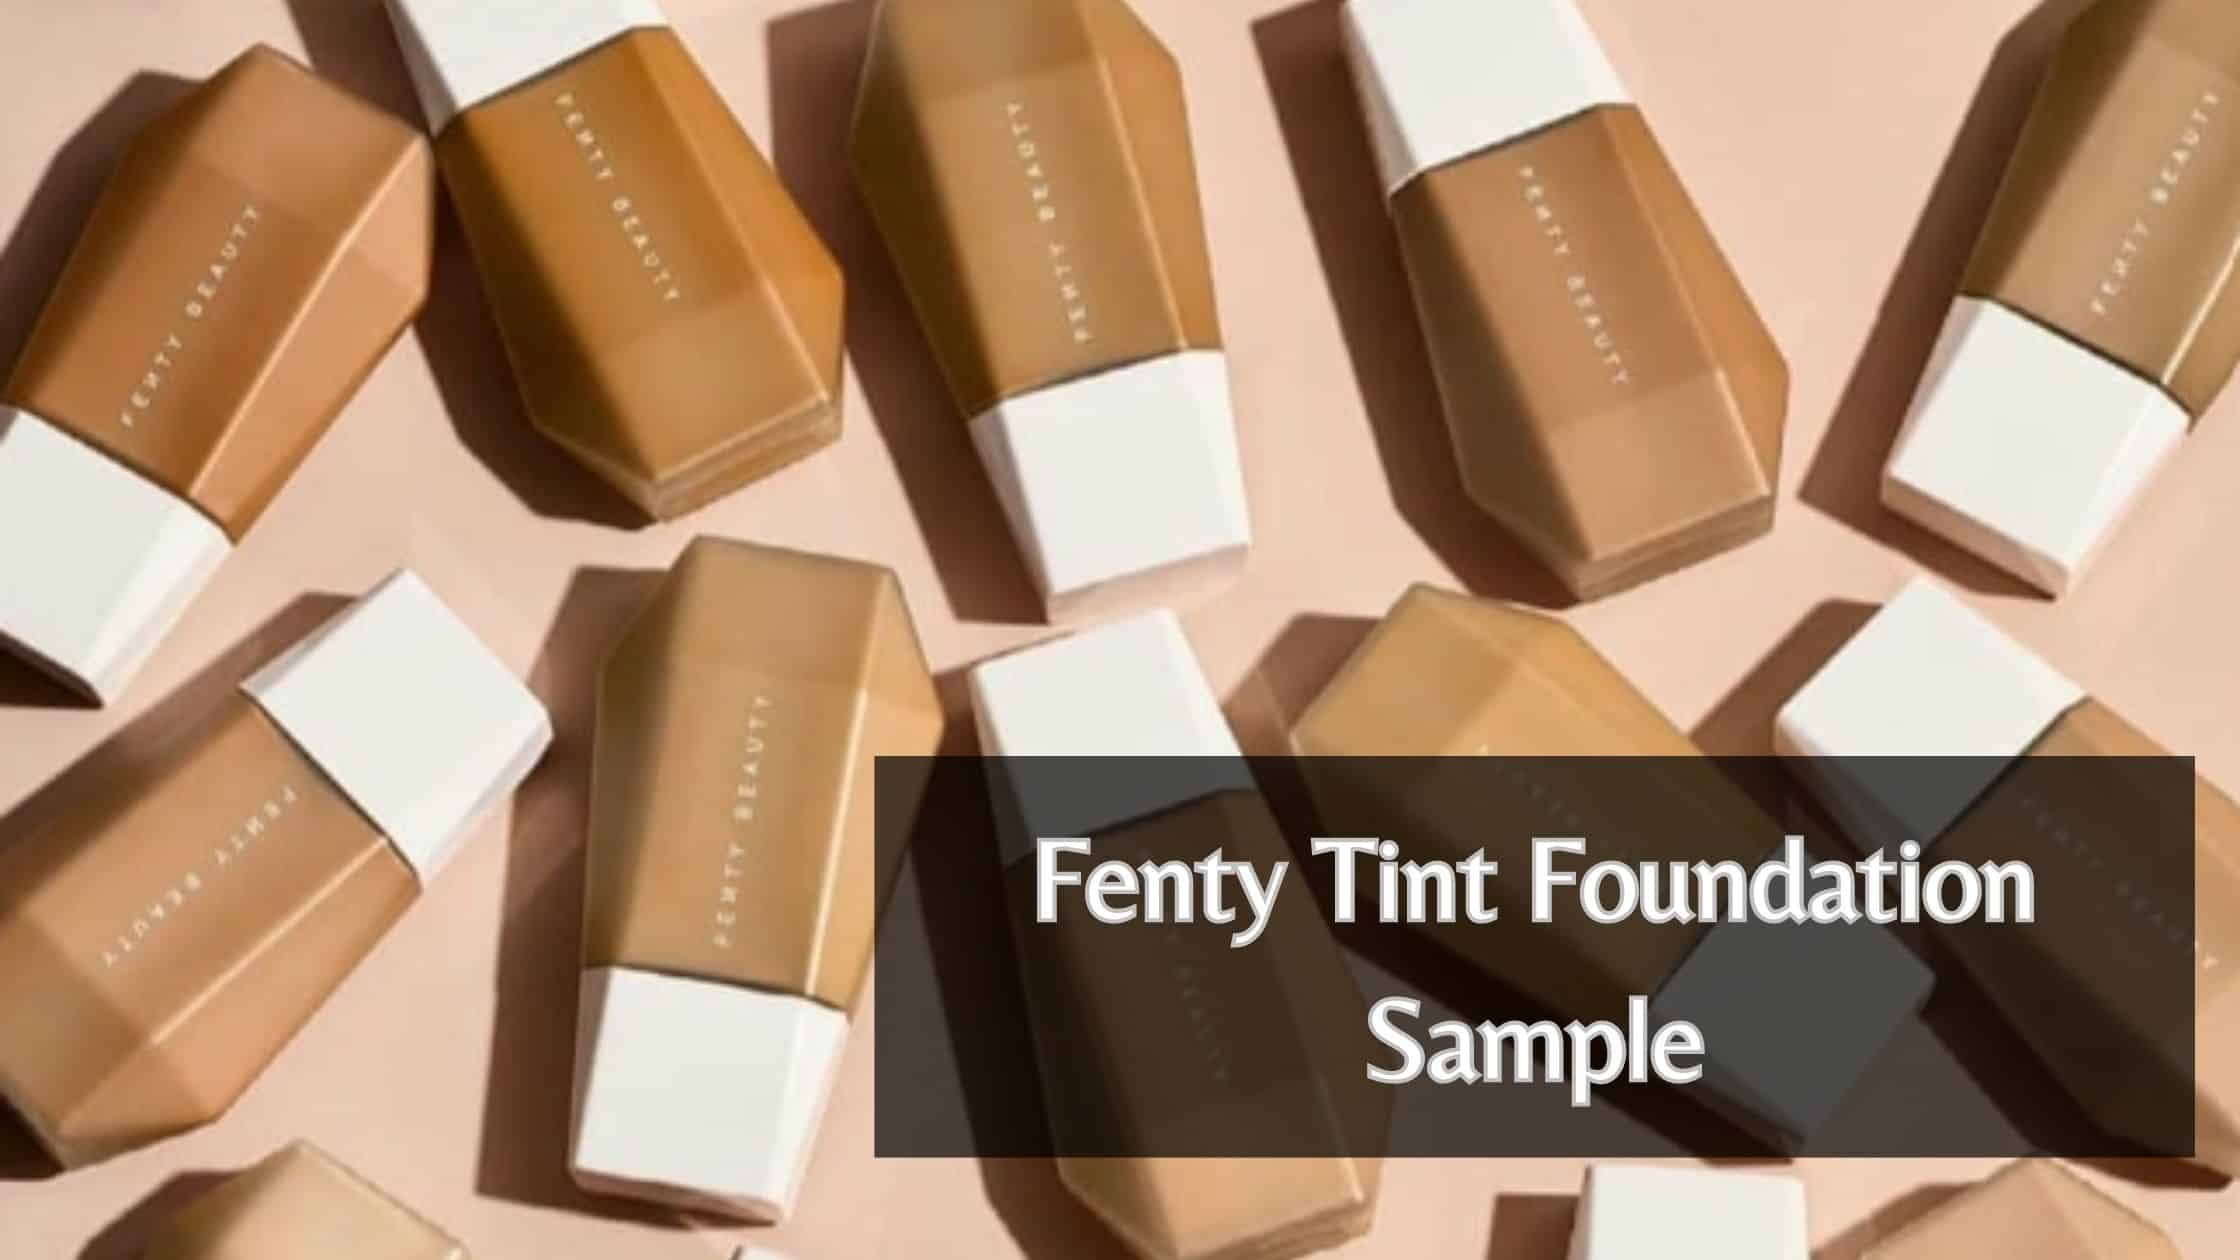 Fenty Tint Foundation Sample